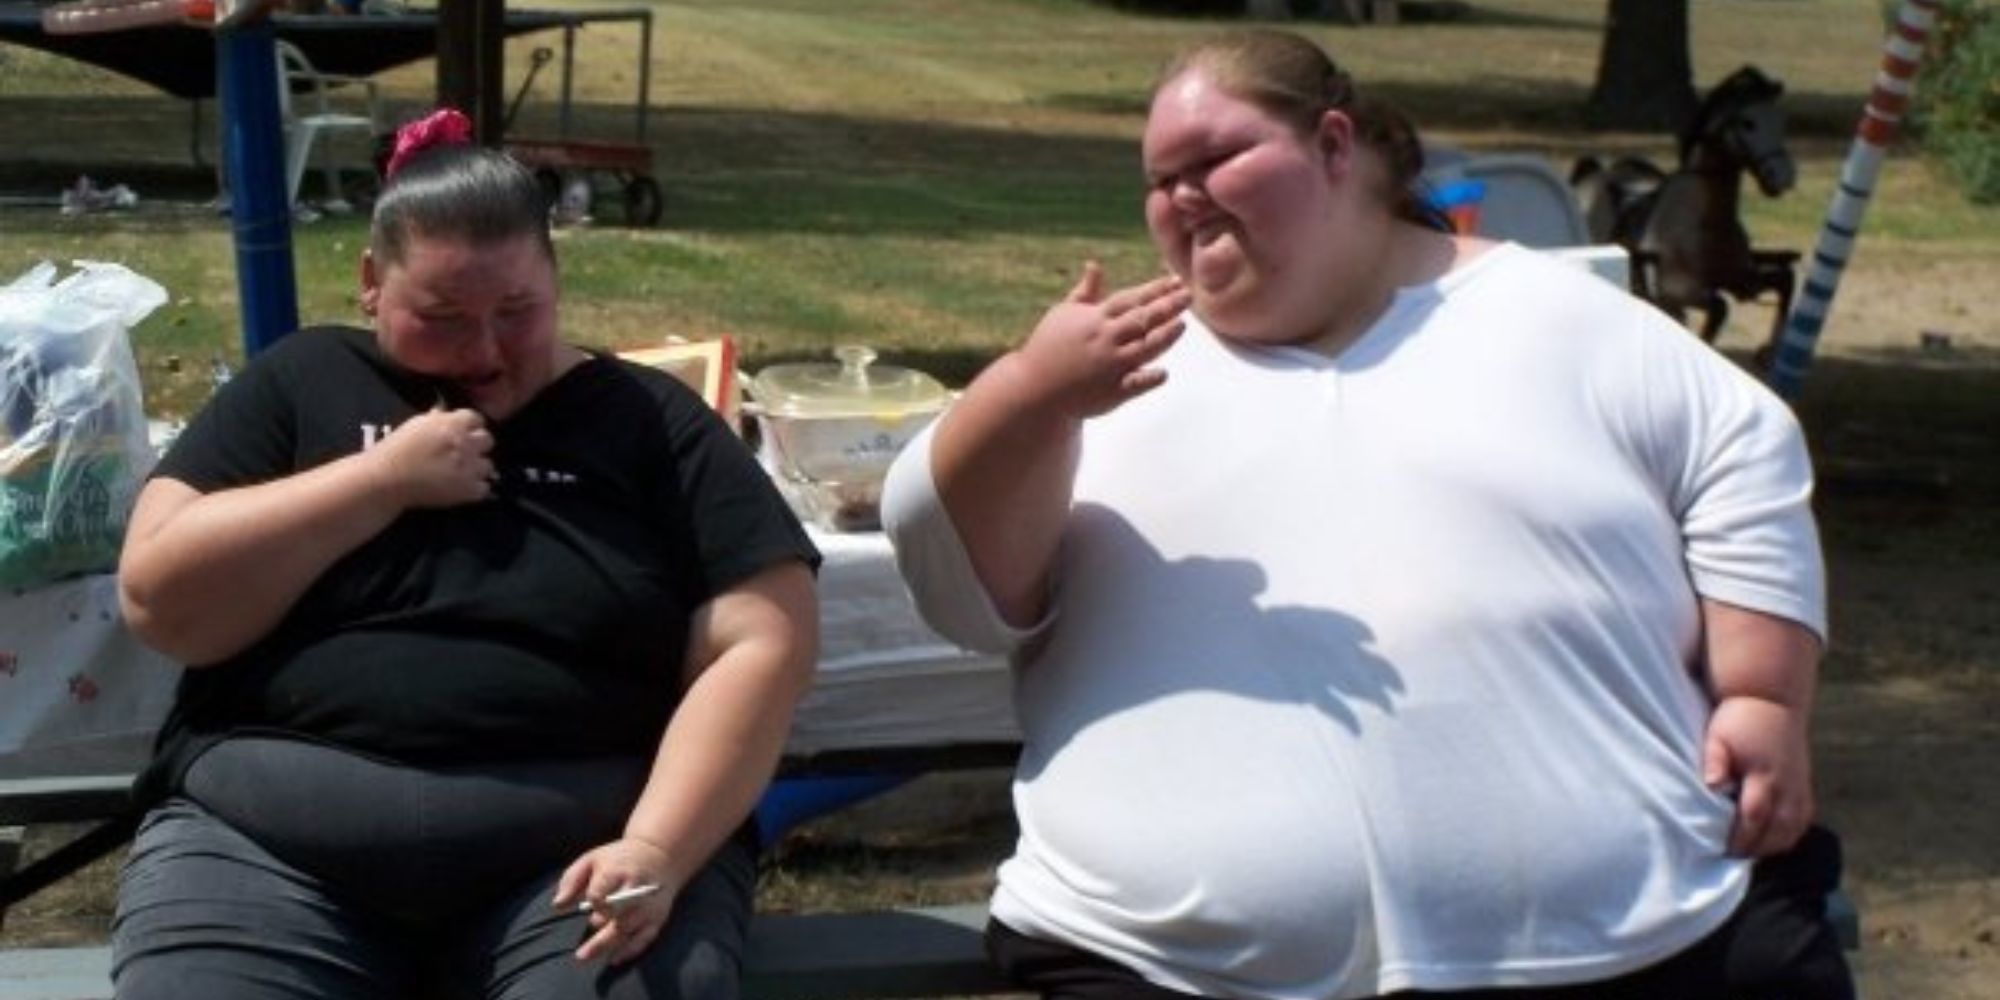 1000-lb Sisters Amy Slaton & Tammy Slaton sitting on a bench side by side, Amy is smoking a cigarette